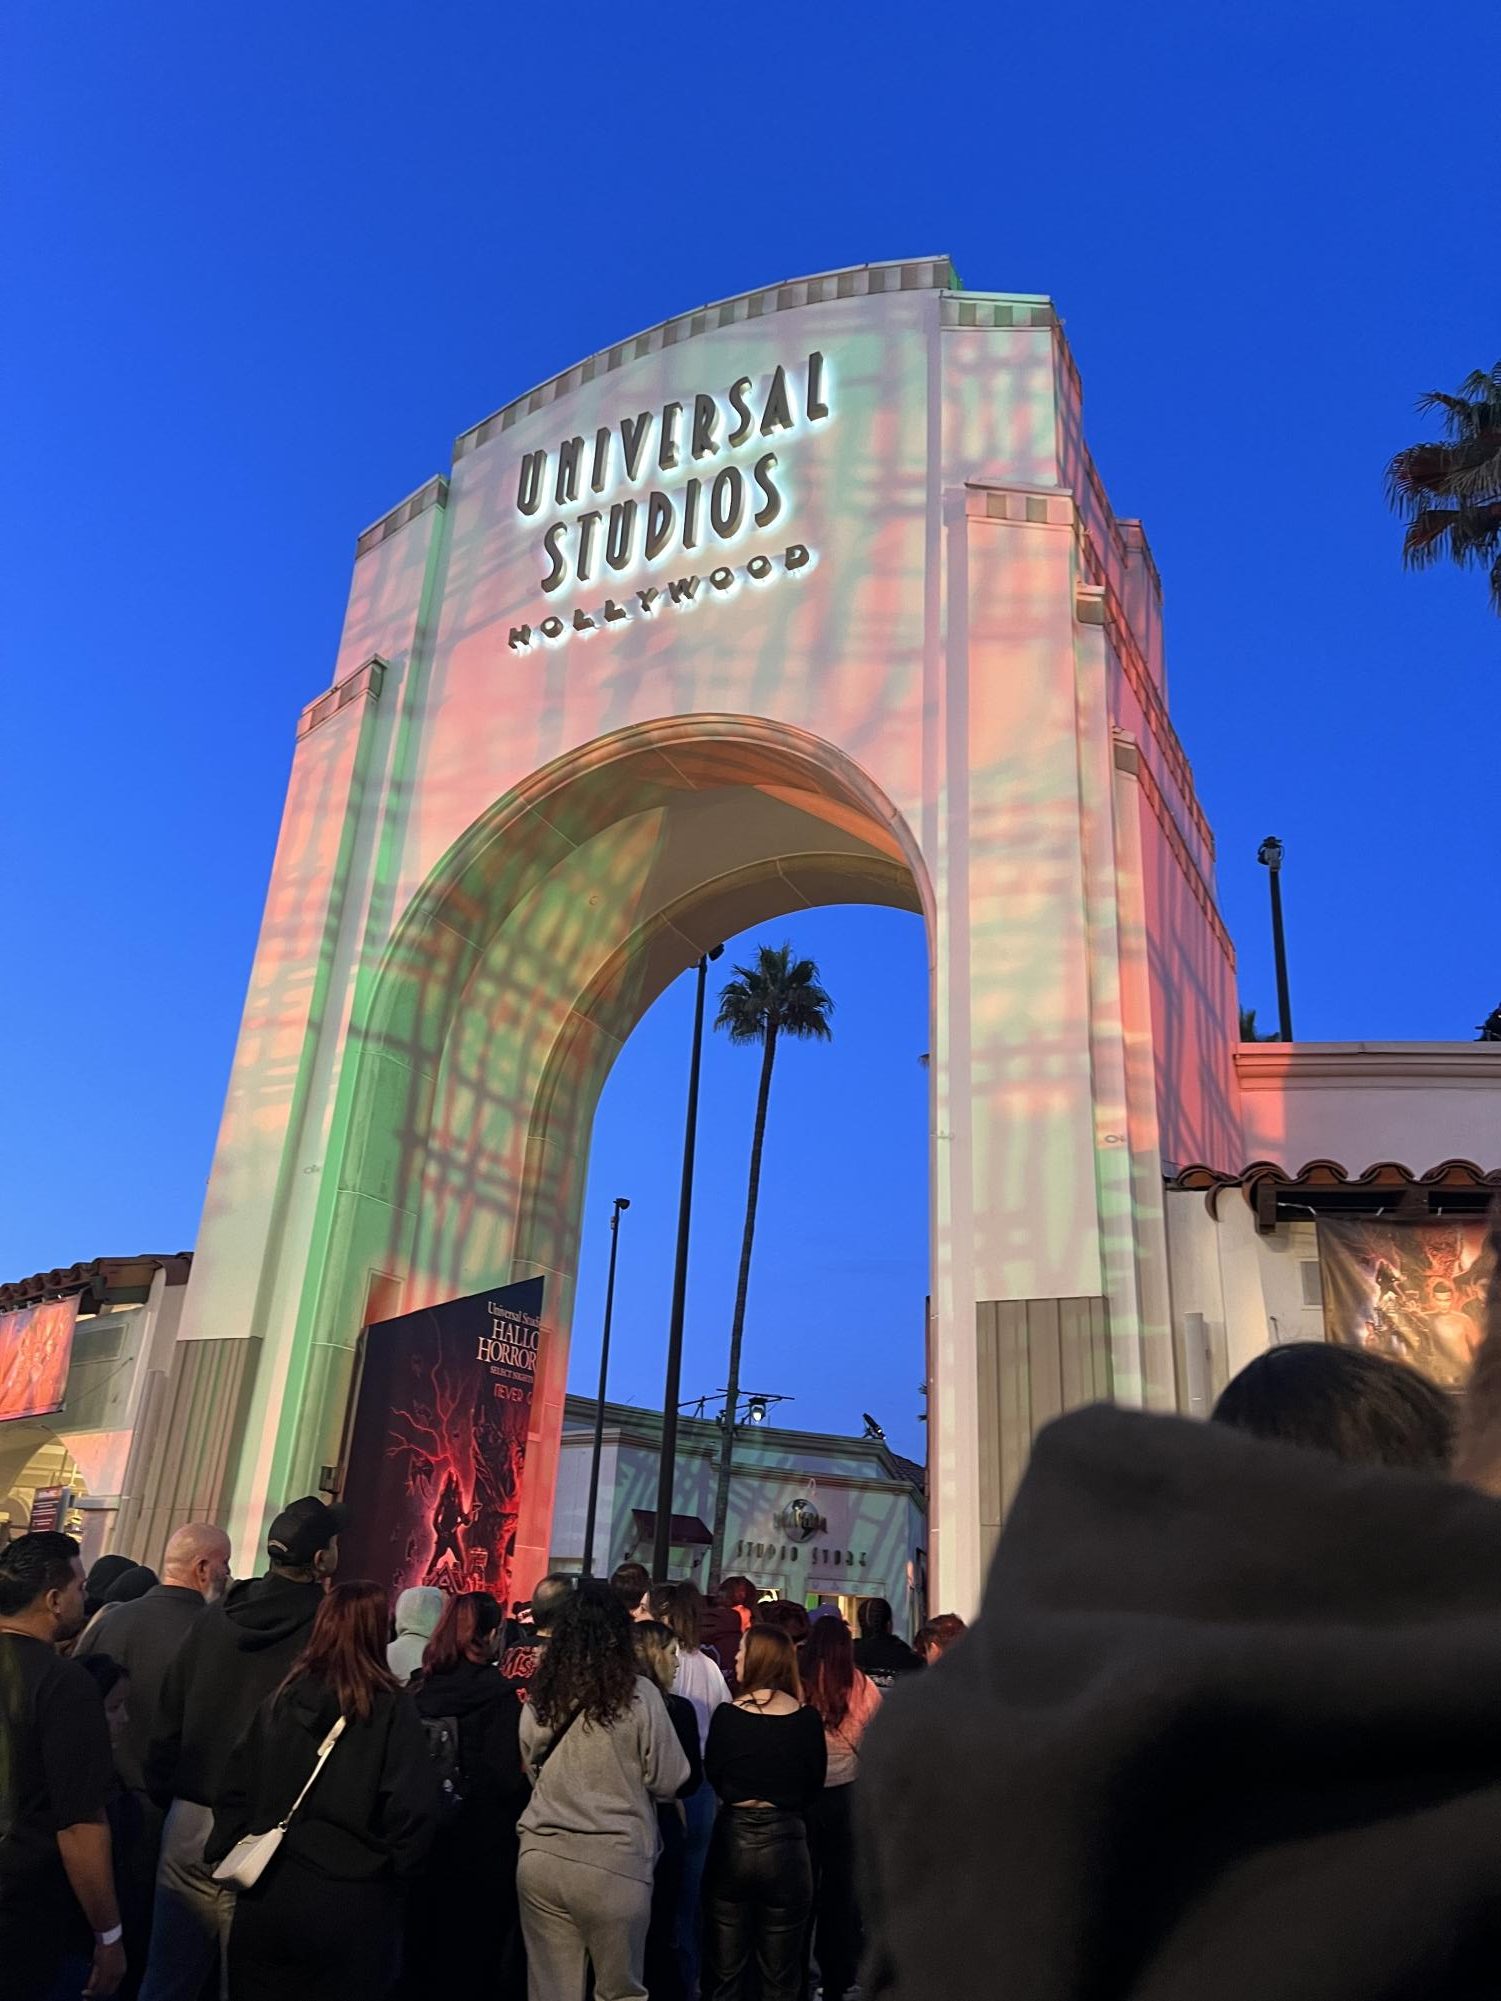 The entrance of Universal Studios taken by Alexis Huerta 